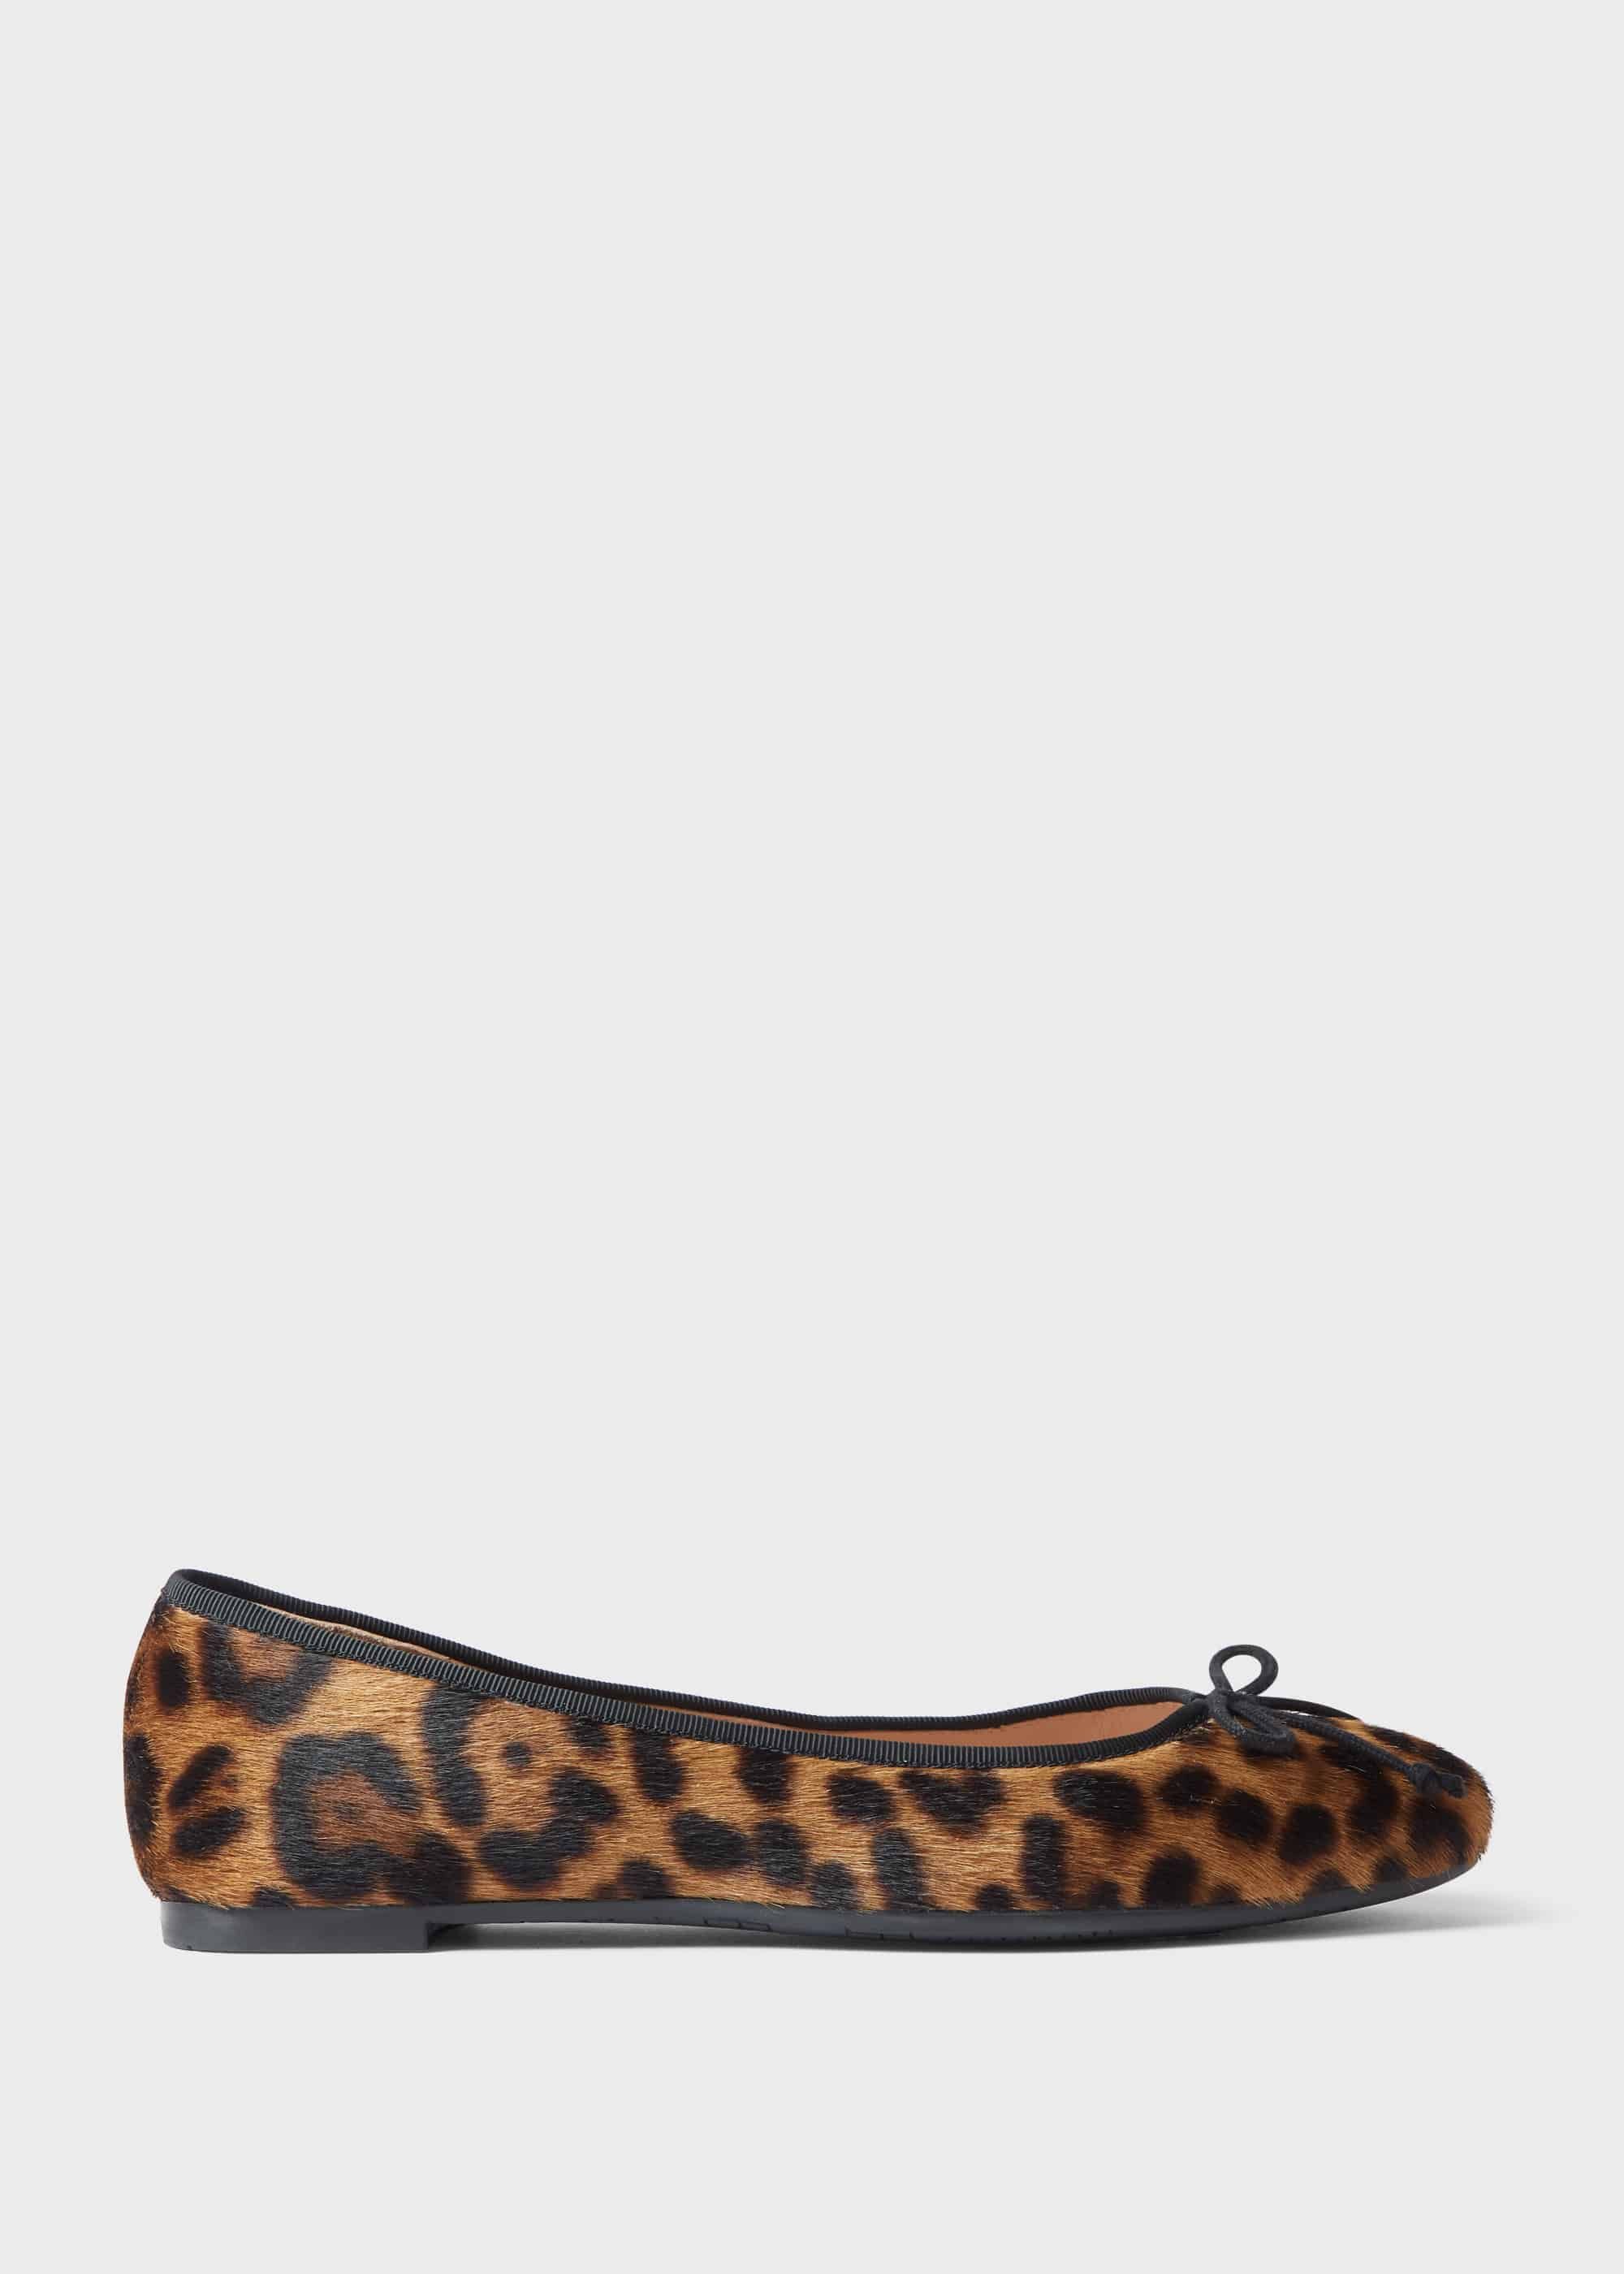 hobbs leopard print shoes